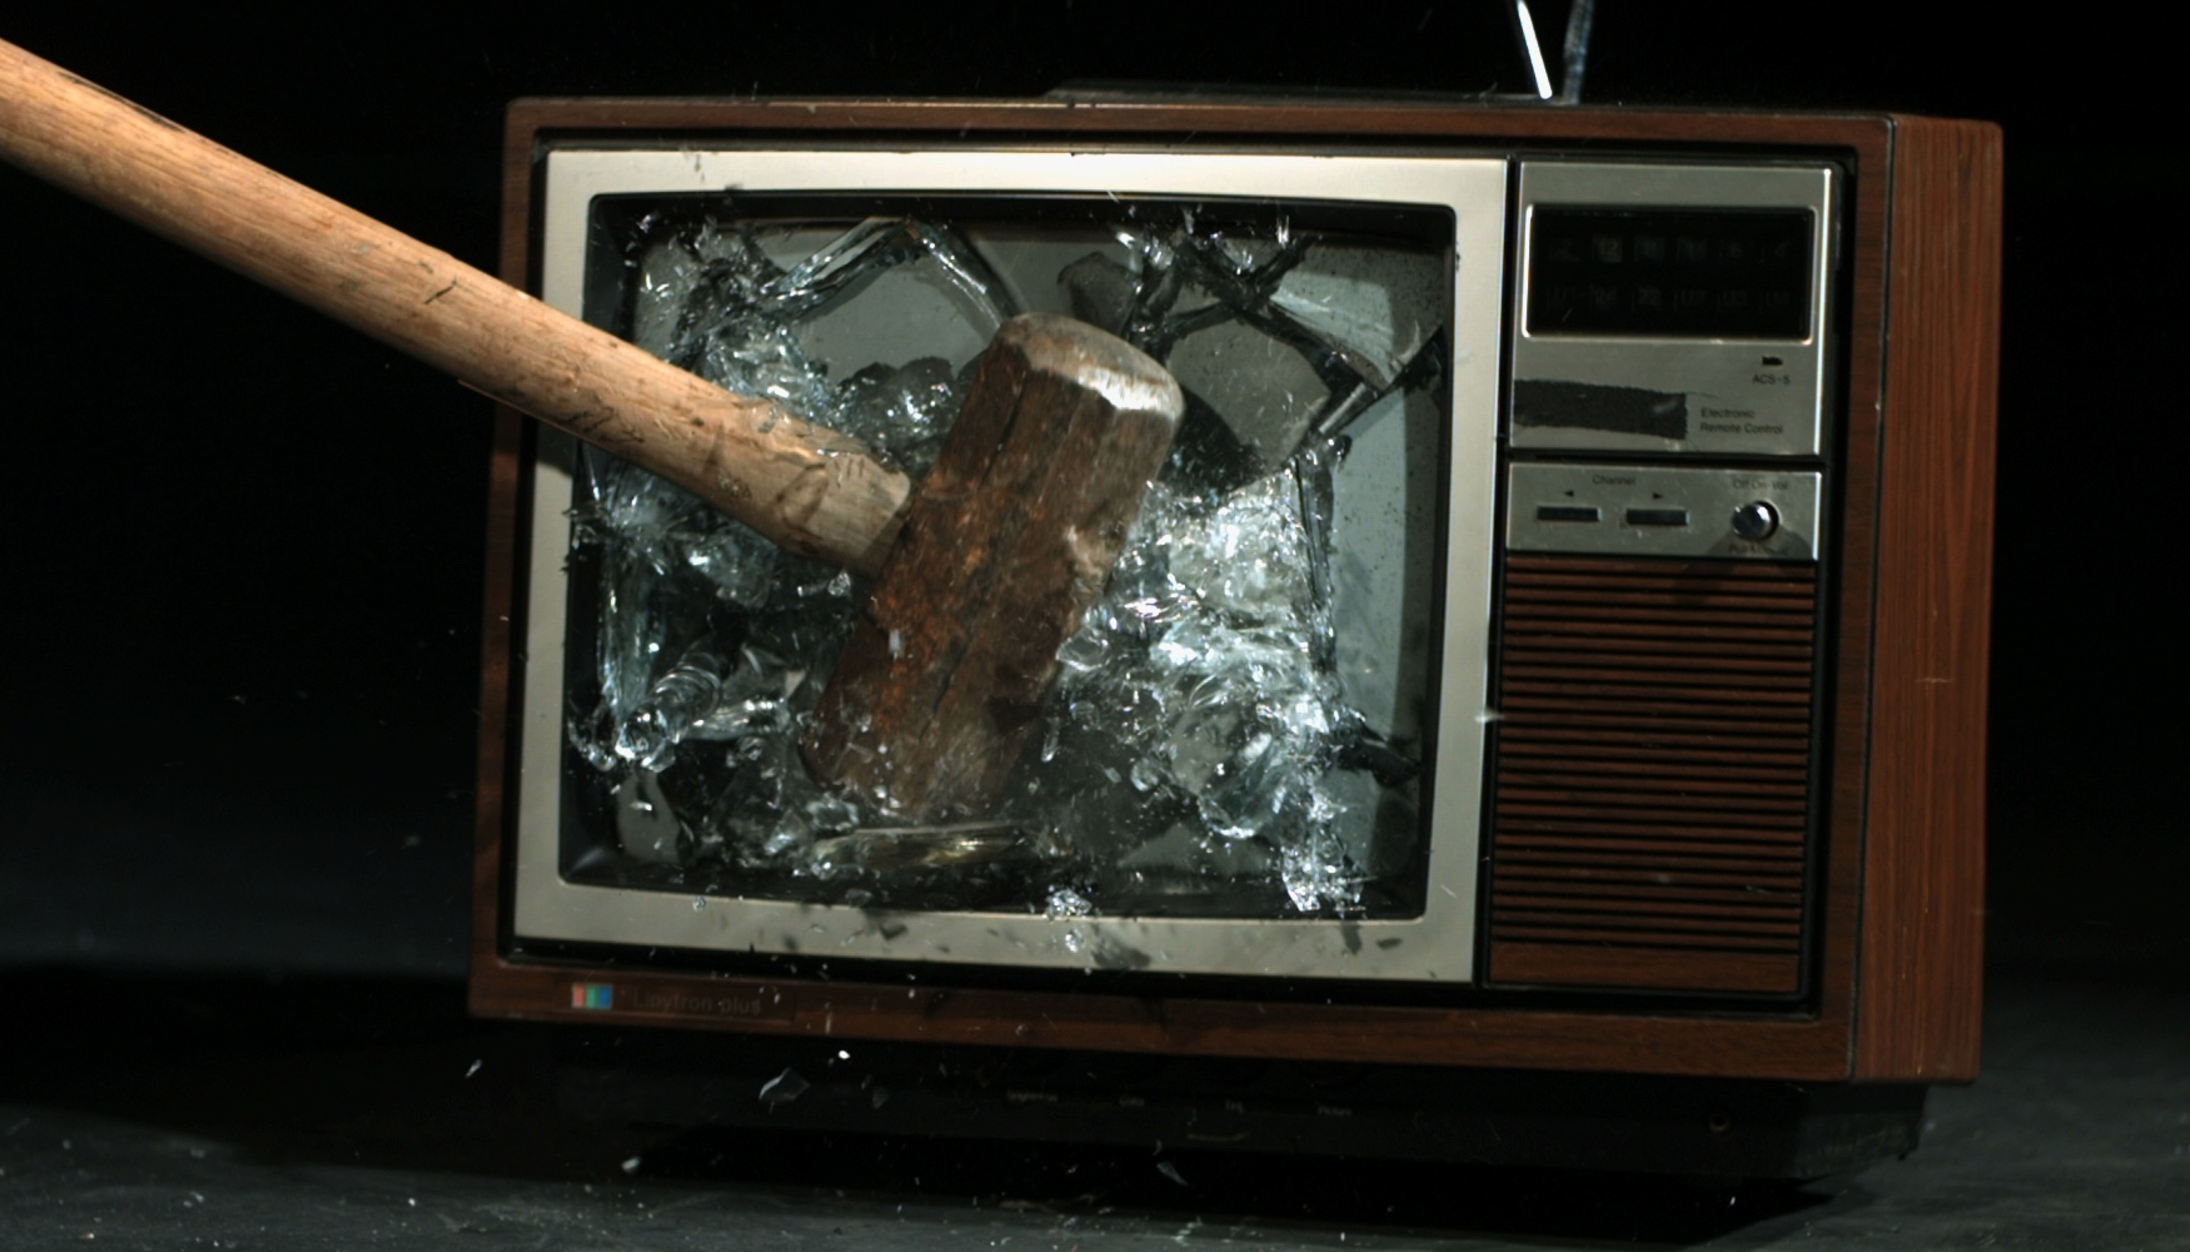 Телевизор сломался буду. Сломанный телевизор. Разбитые телевизоры. Разбитый старый телевизор. Старый сломанный телевизор.